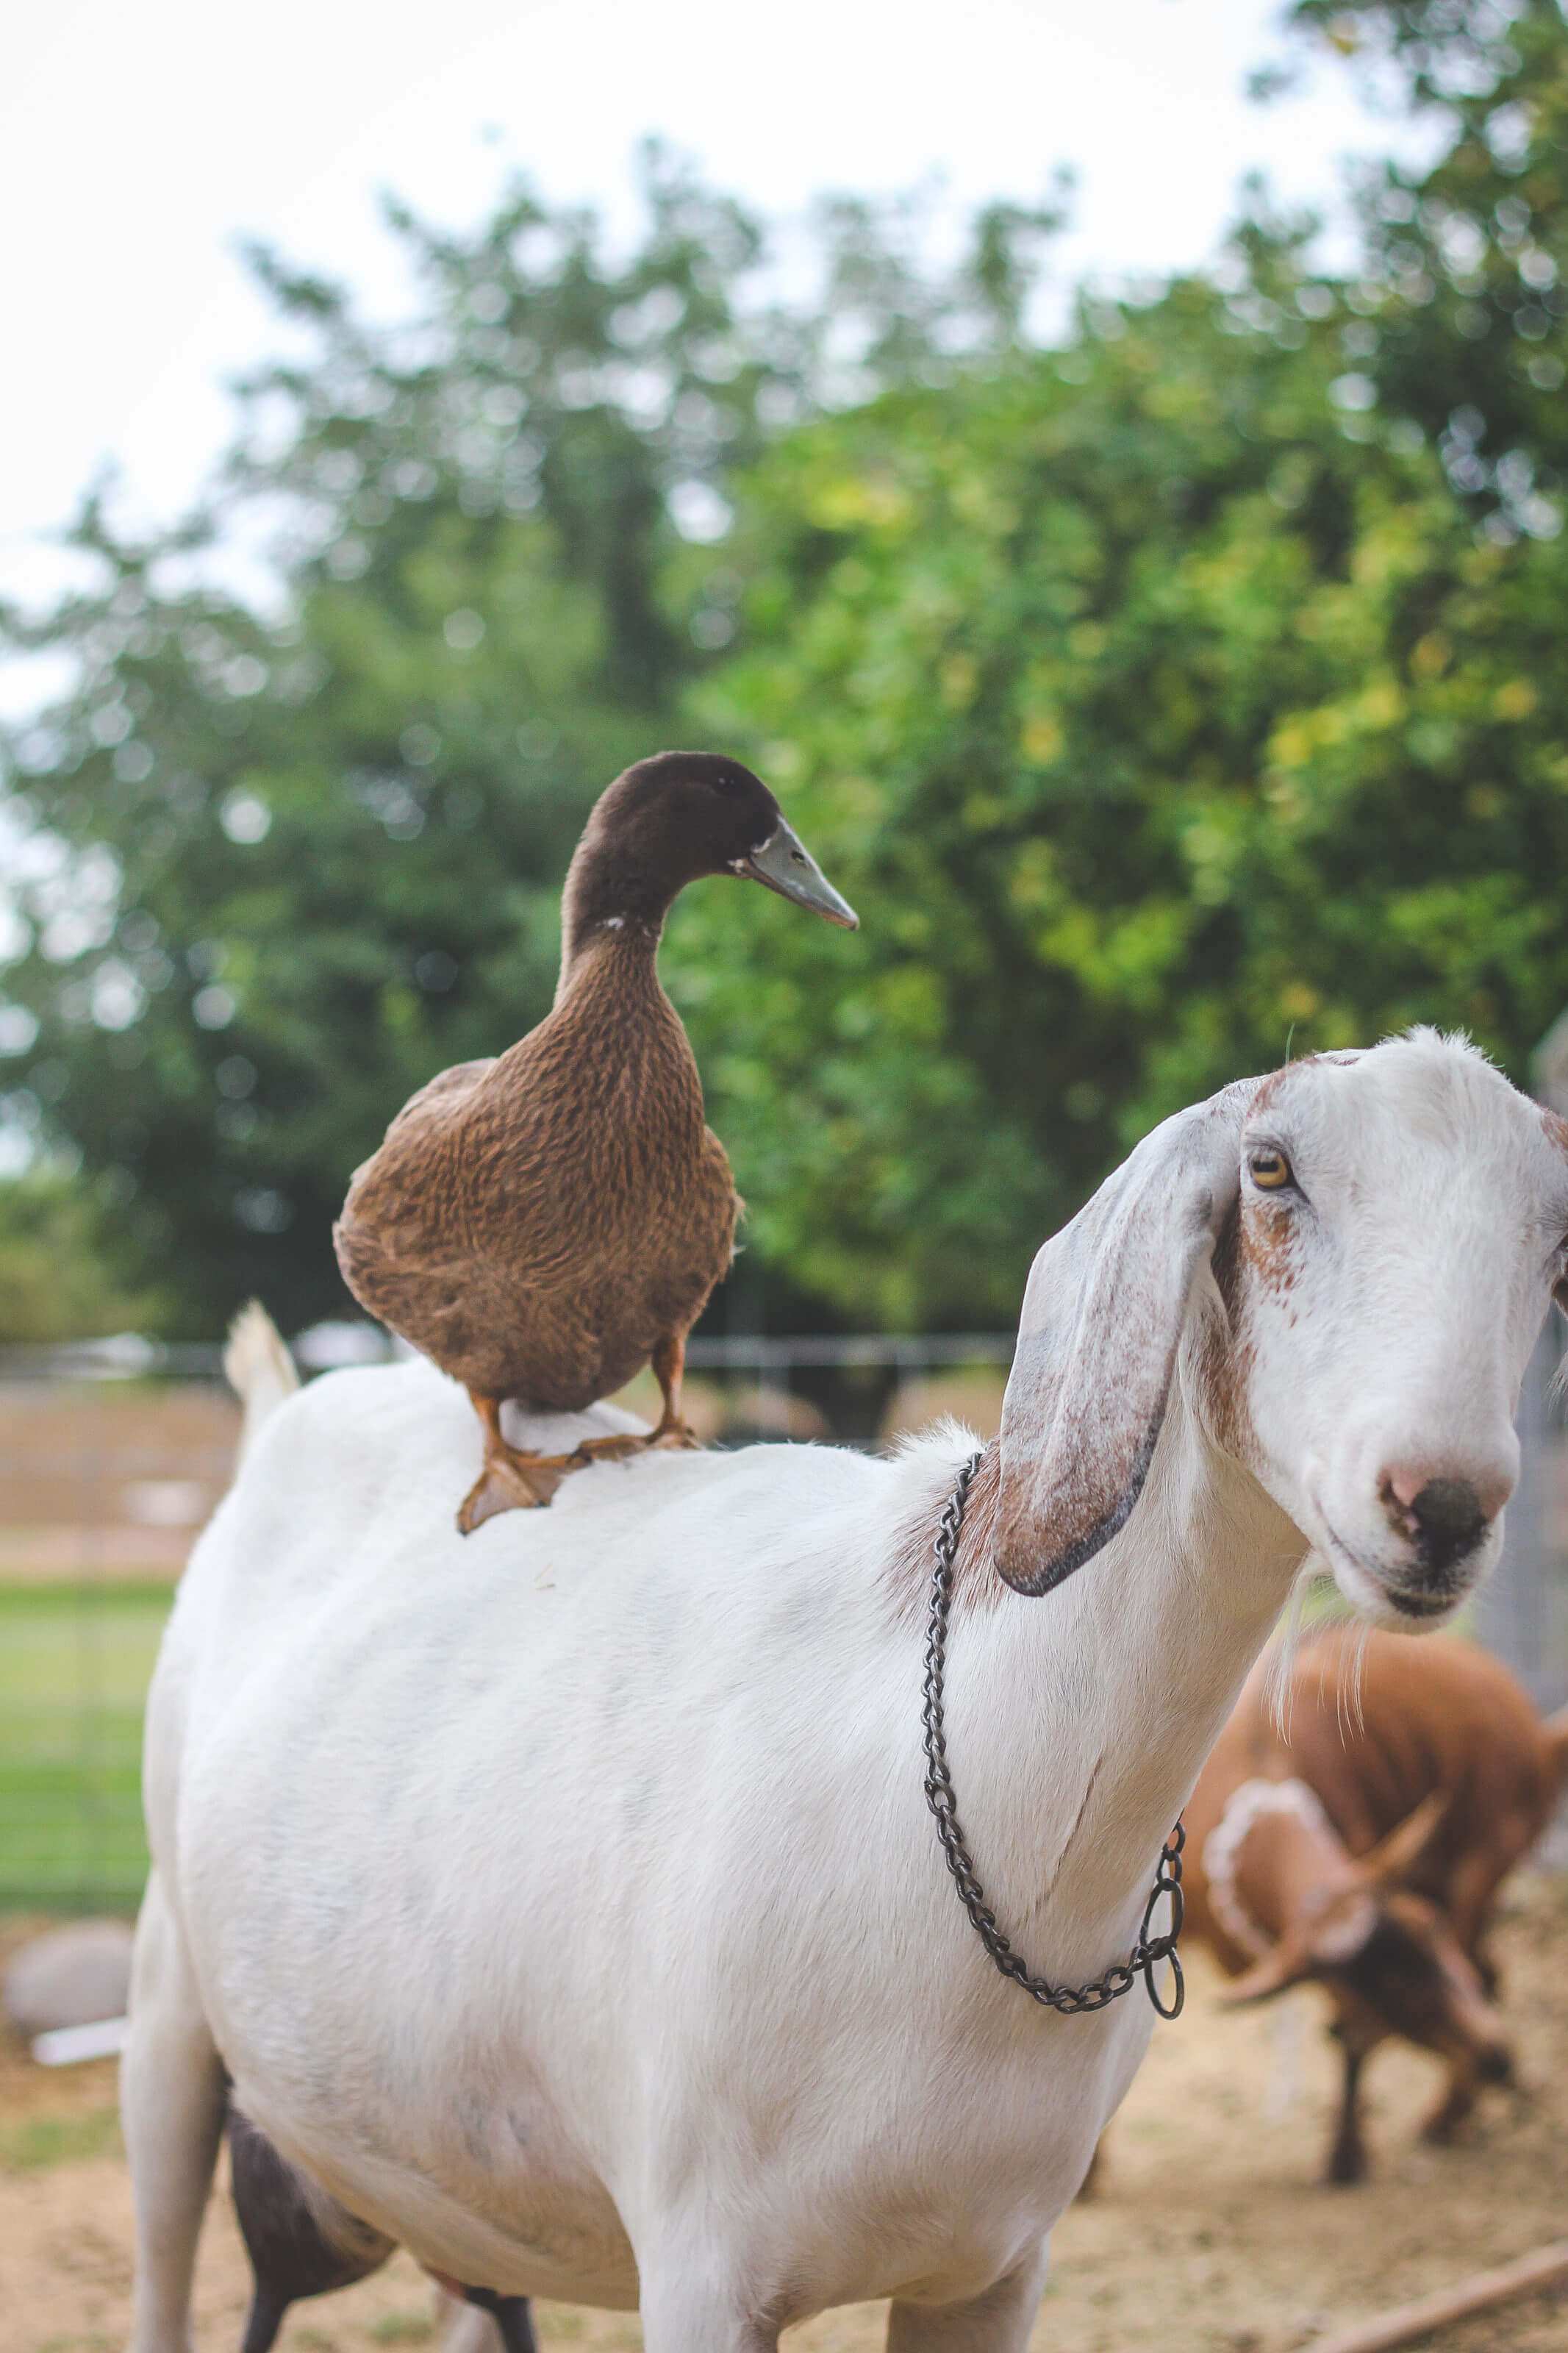 Duck sitting on goat's back on farm.